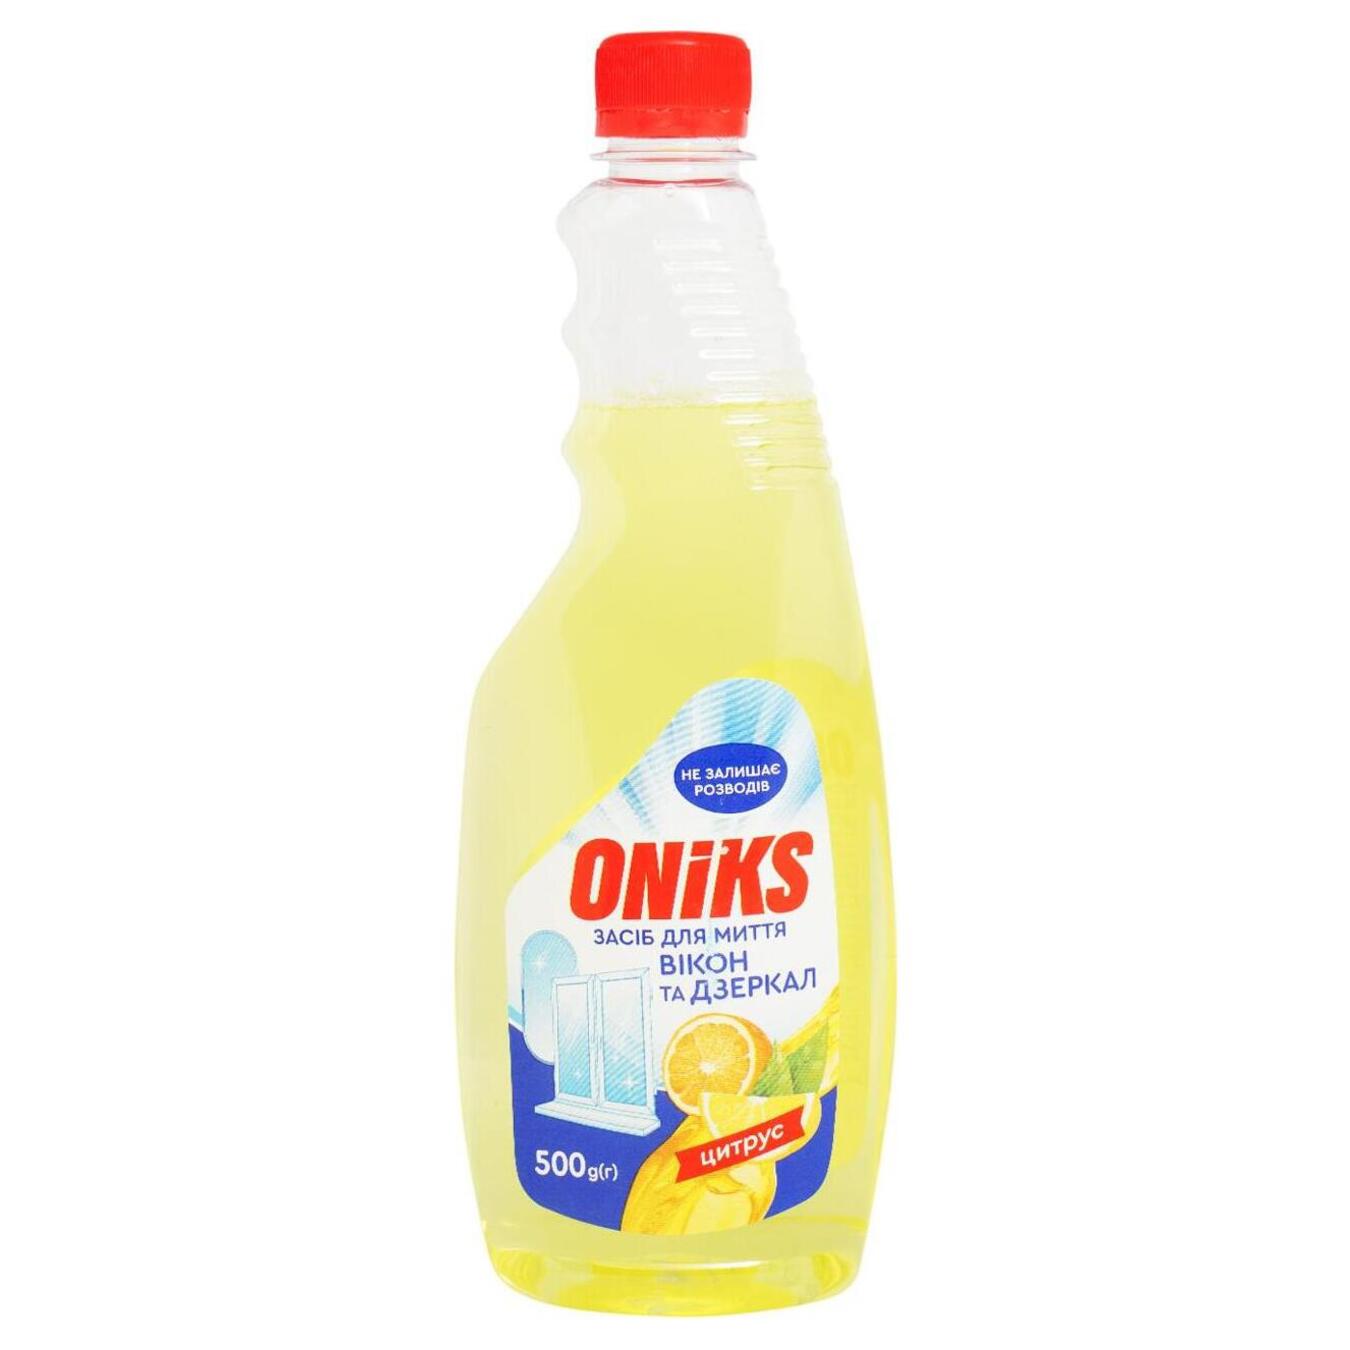 Средство для мытья Oniks окон и зеркал цитрус 500мл